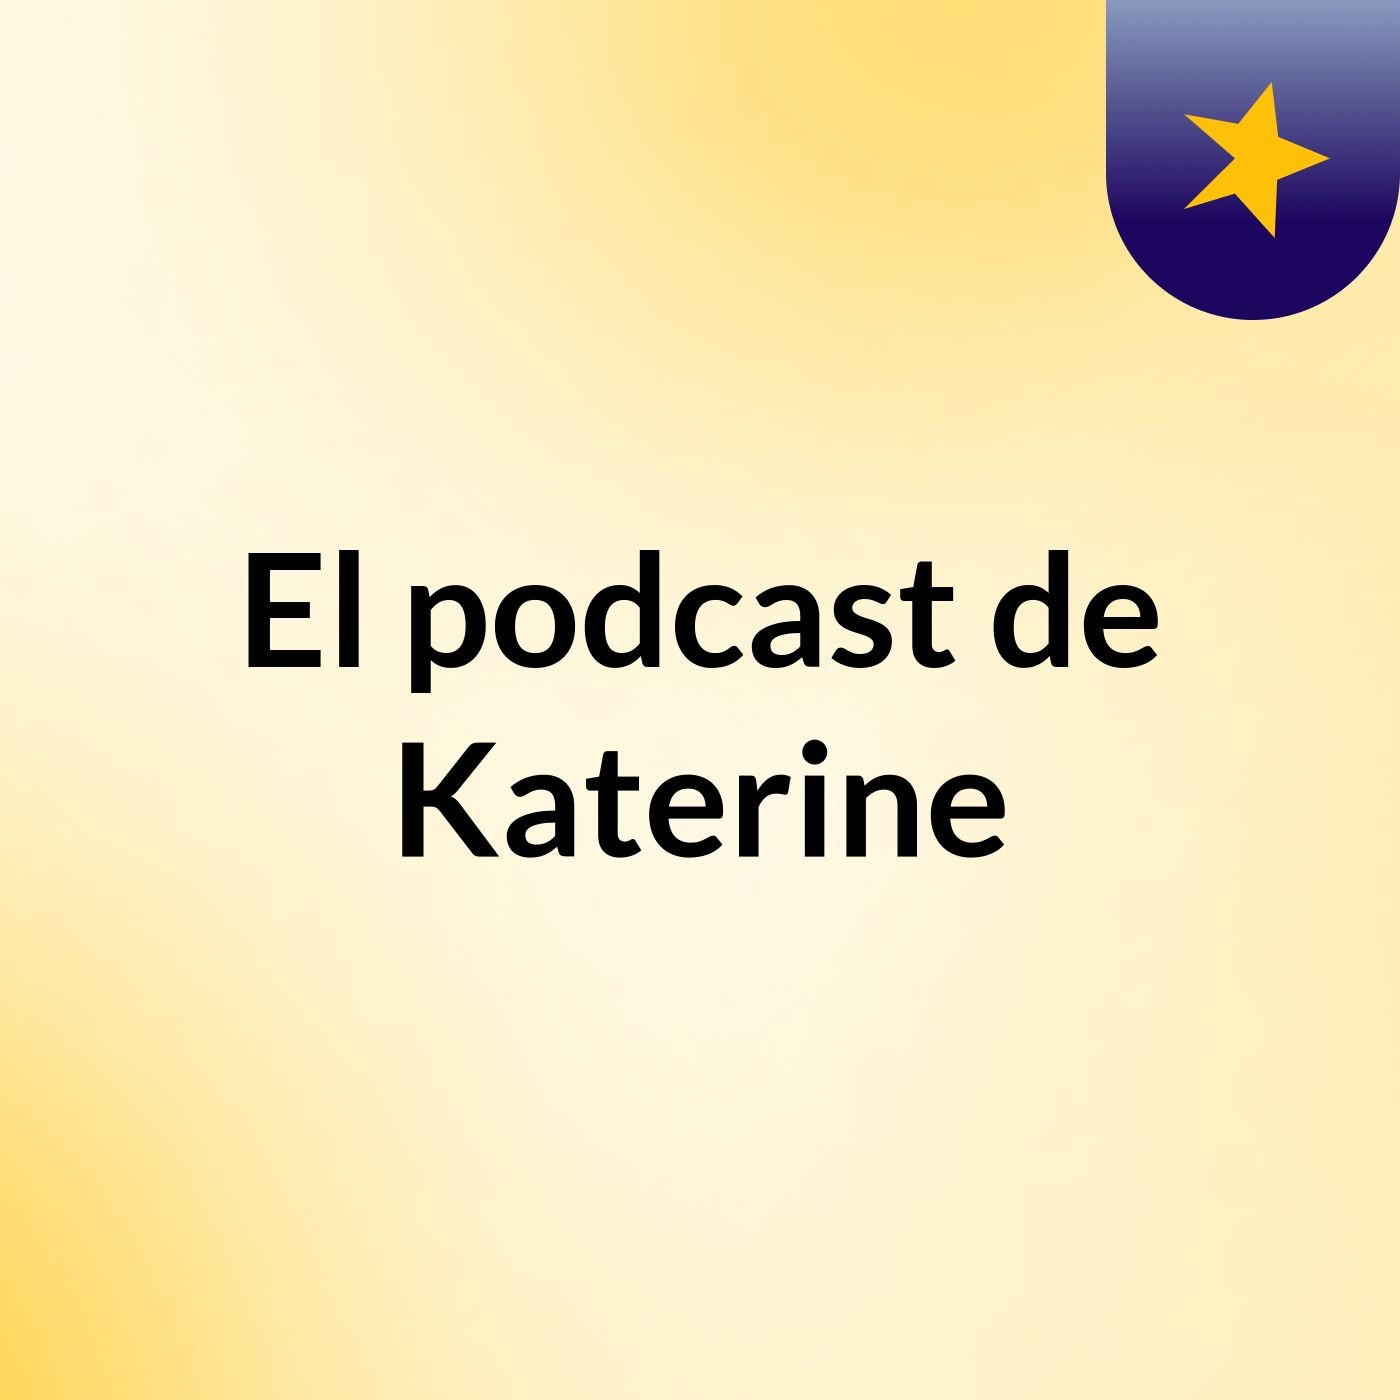 El podcast de Katerine